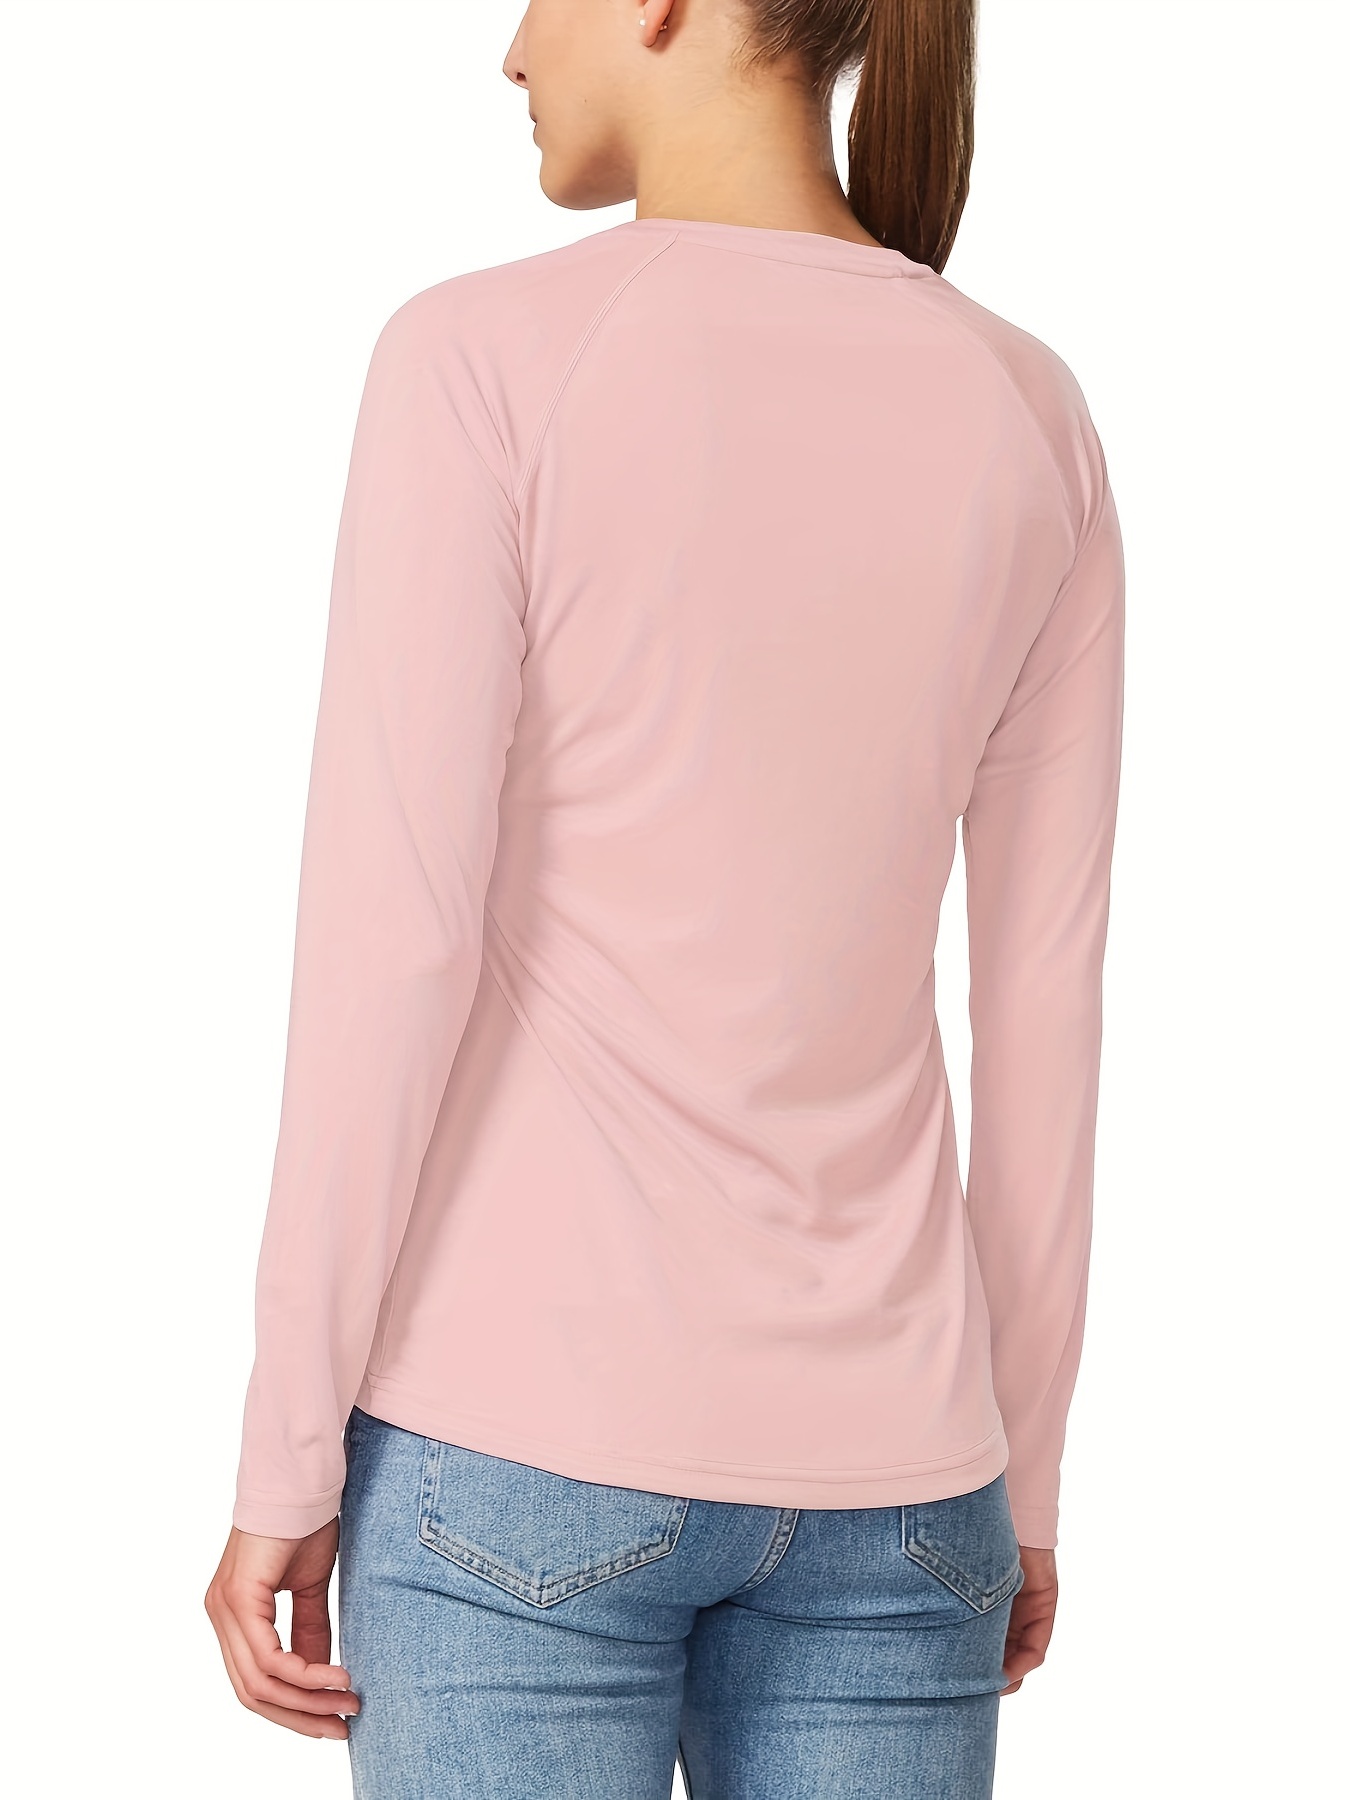 Buy Women's UPF 50+ Sun Shirts UV Protection Long Sleeve Sport Shirts for  Hiking Fishing Outdoor Running (Violet-YL, XL) at